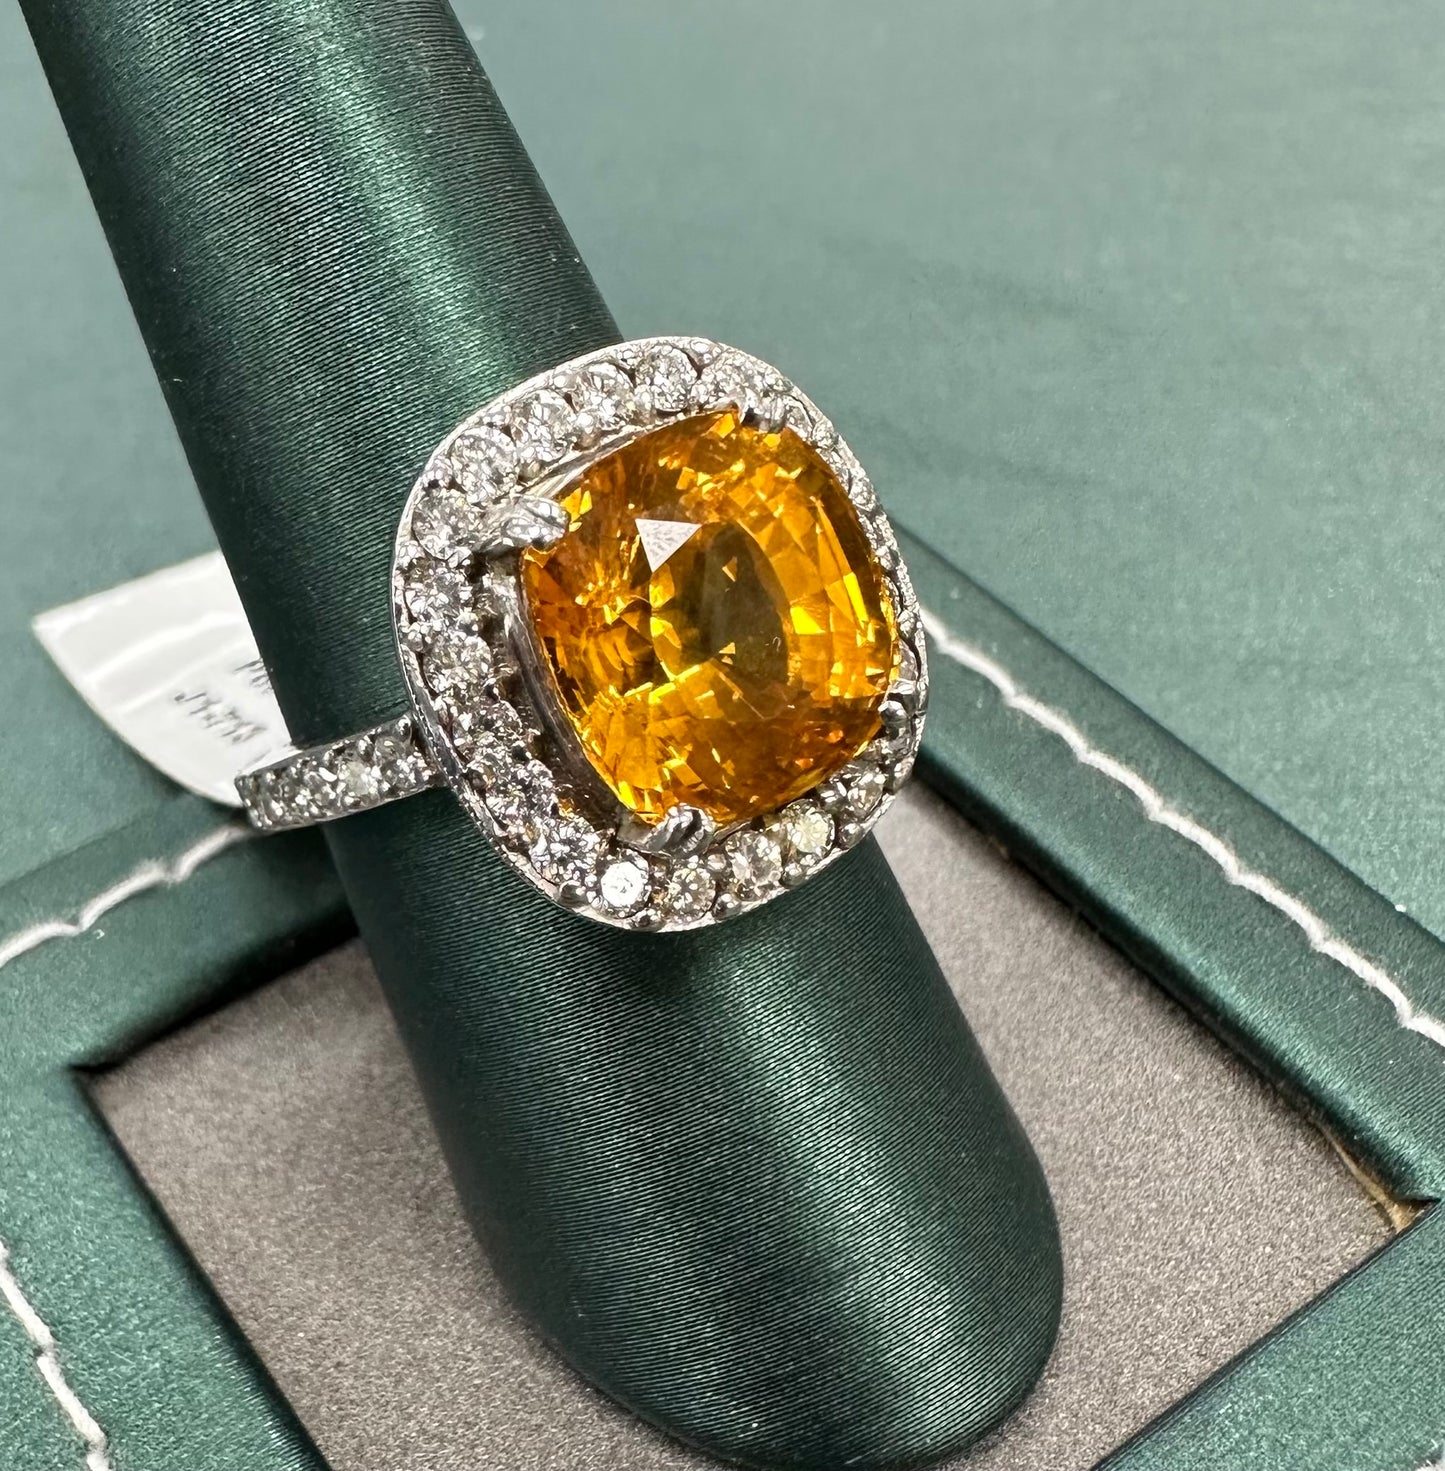 The orange sapphire sun diamond ring